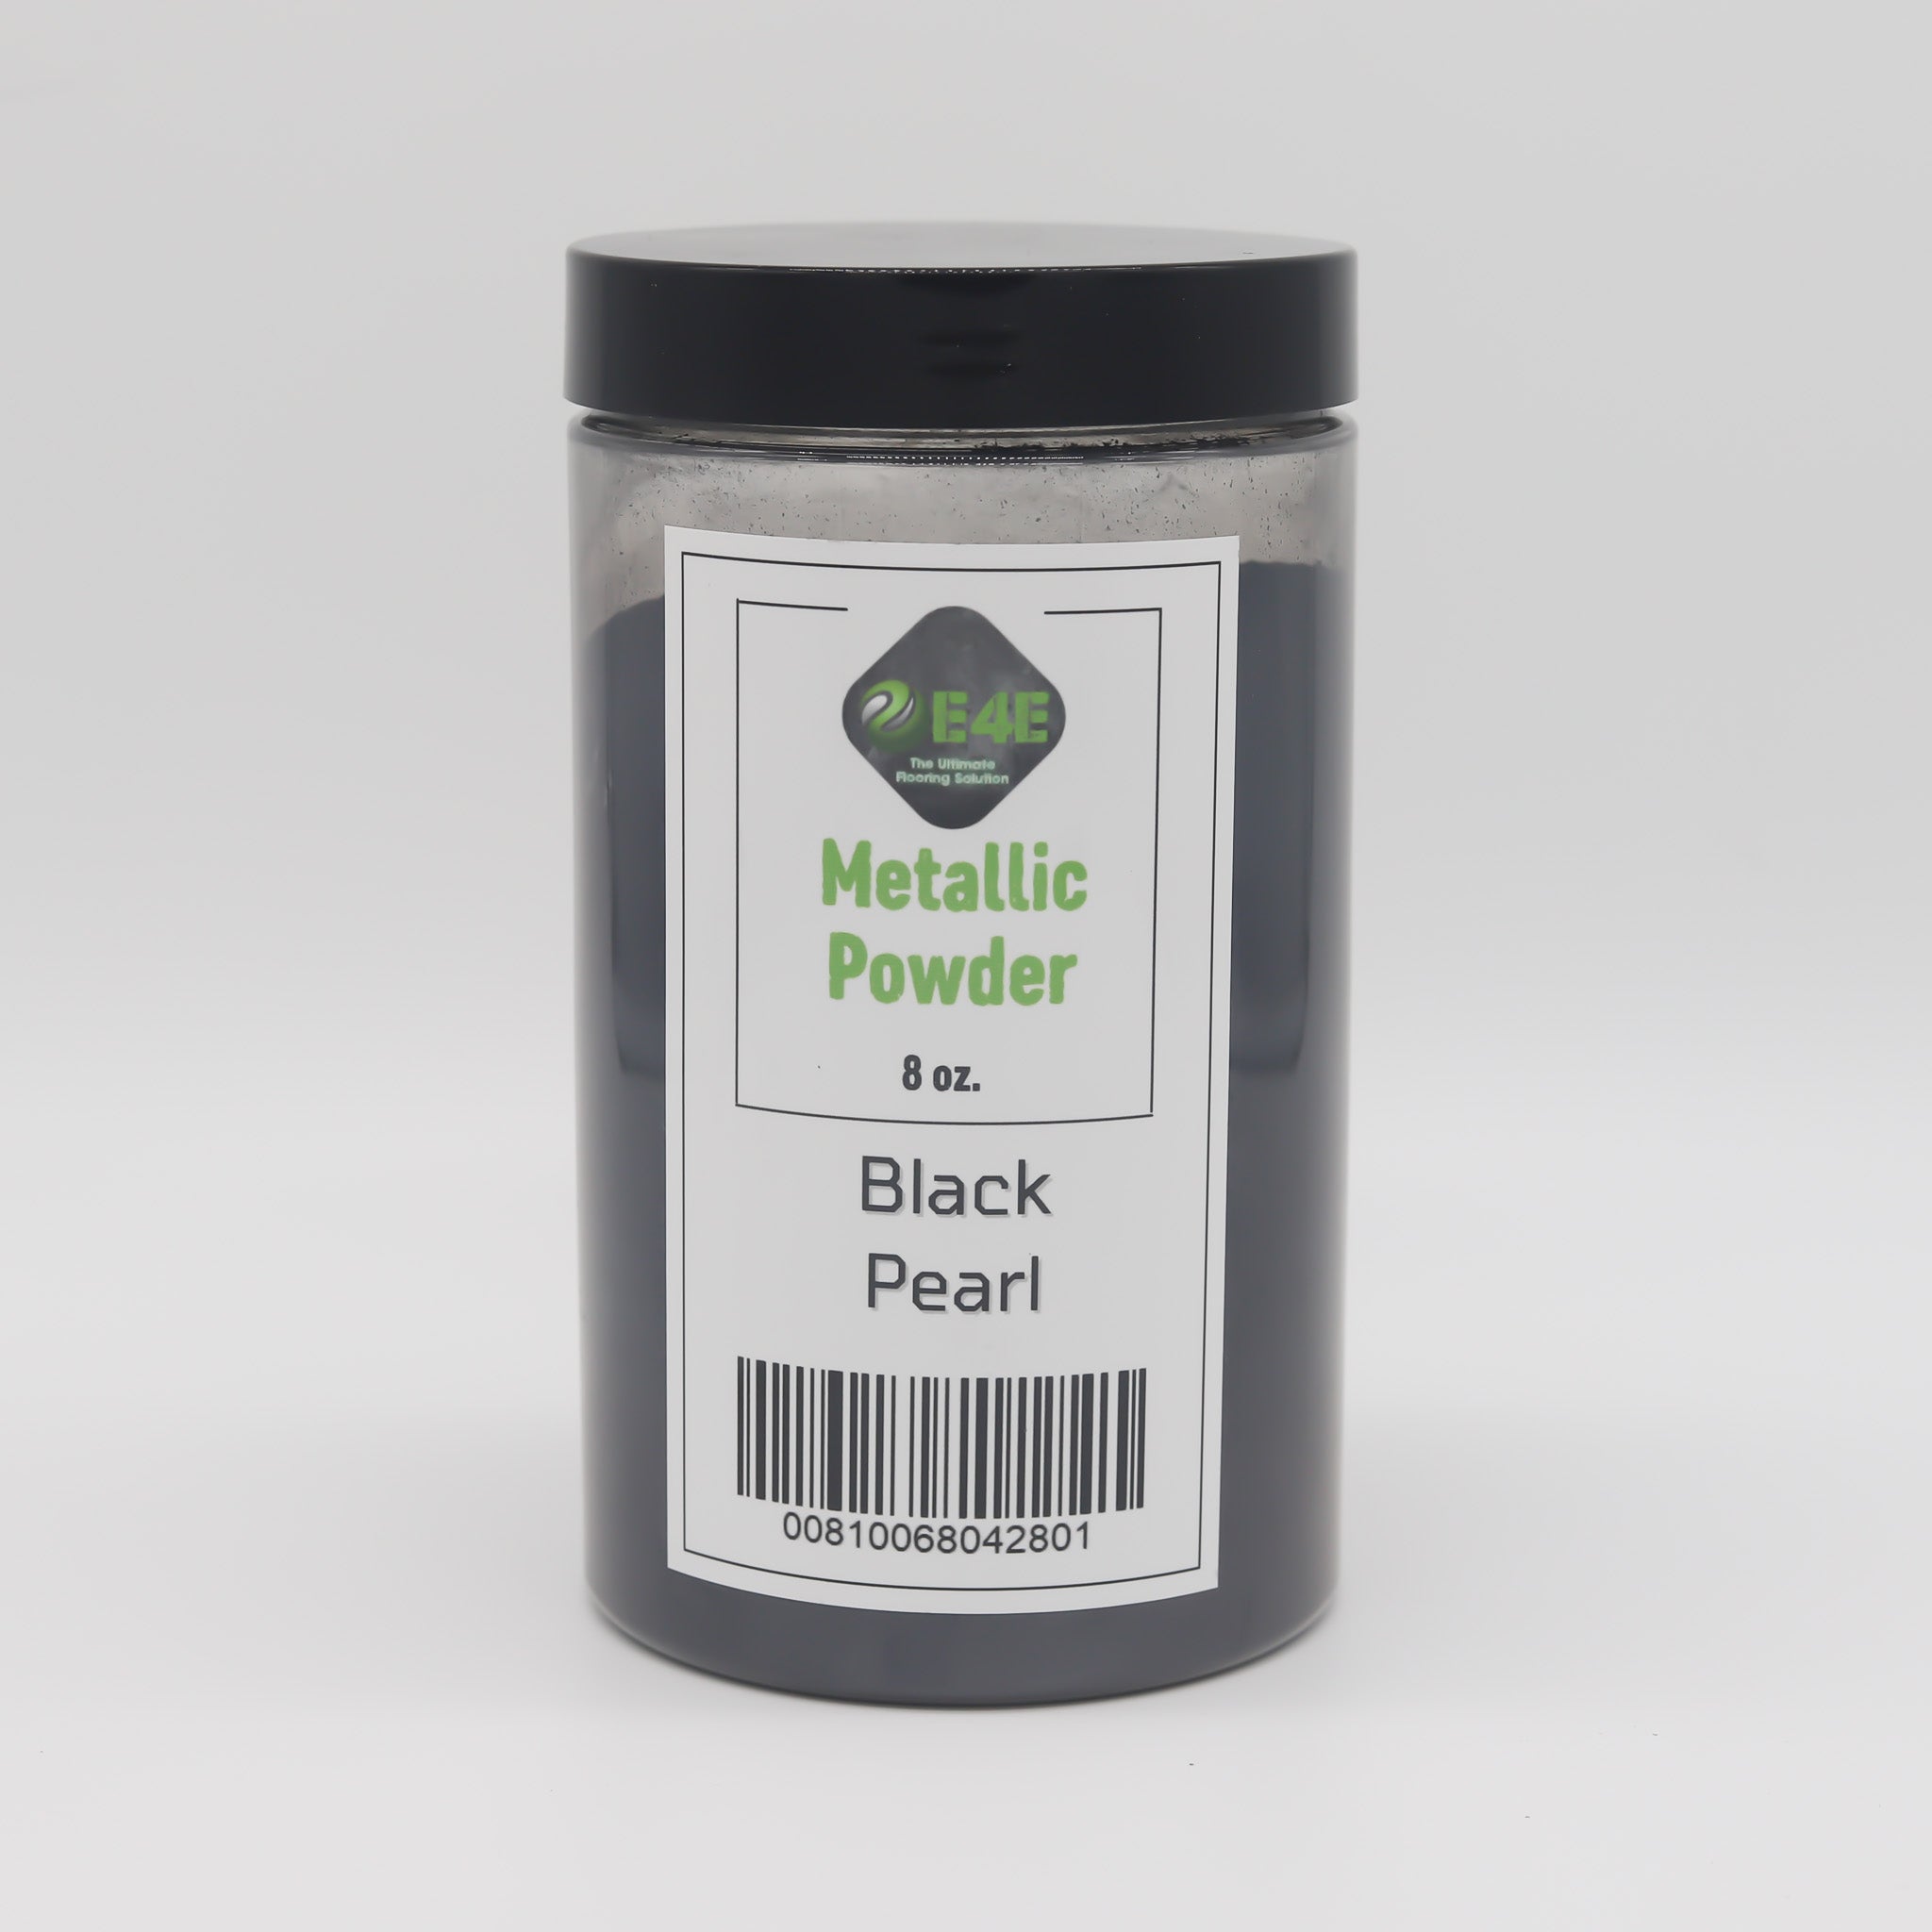 E4E Metallic Powder - Black Pearl